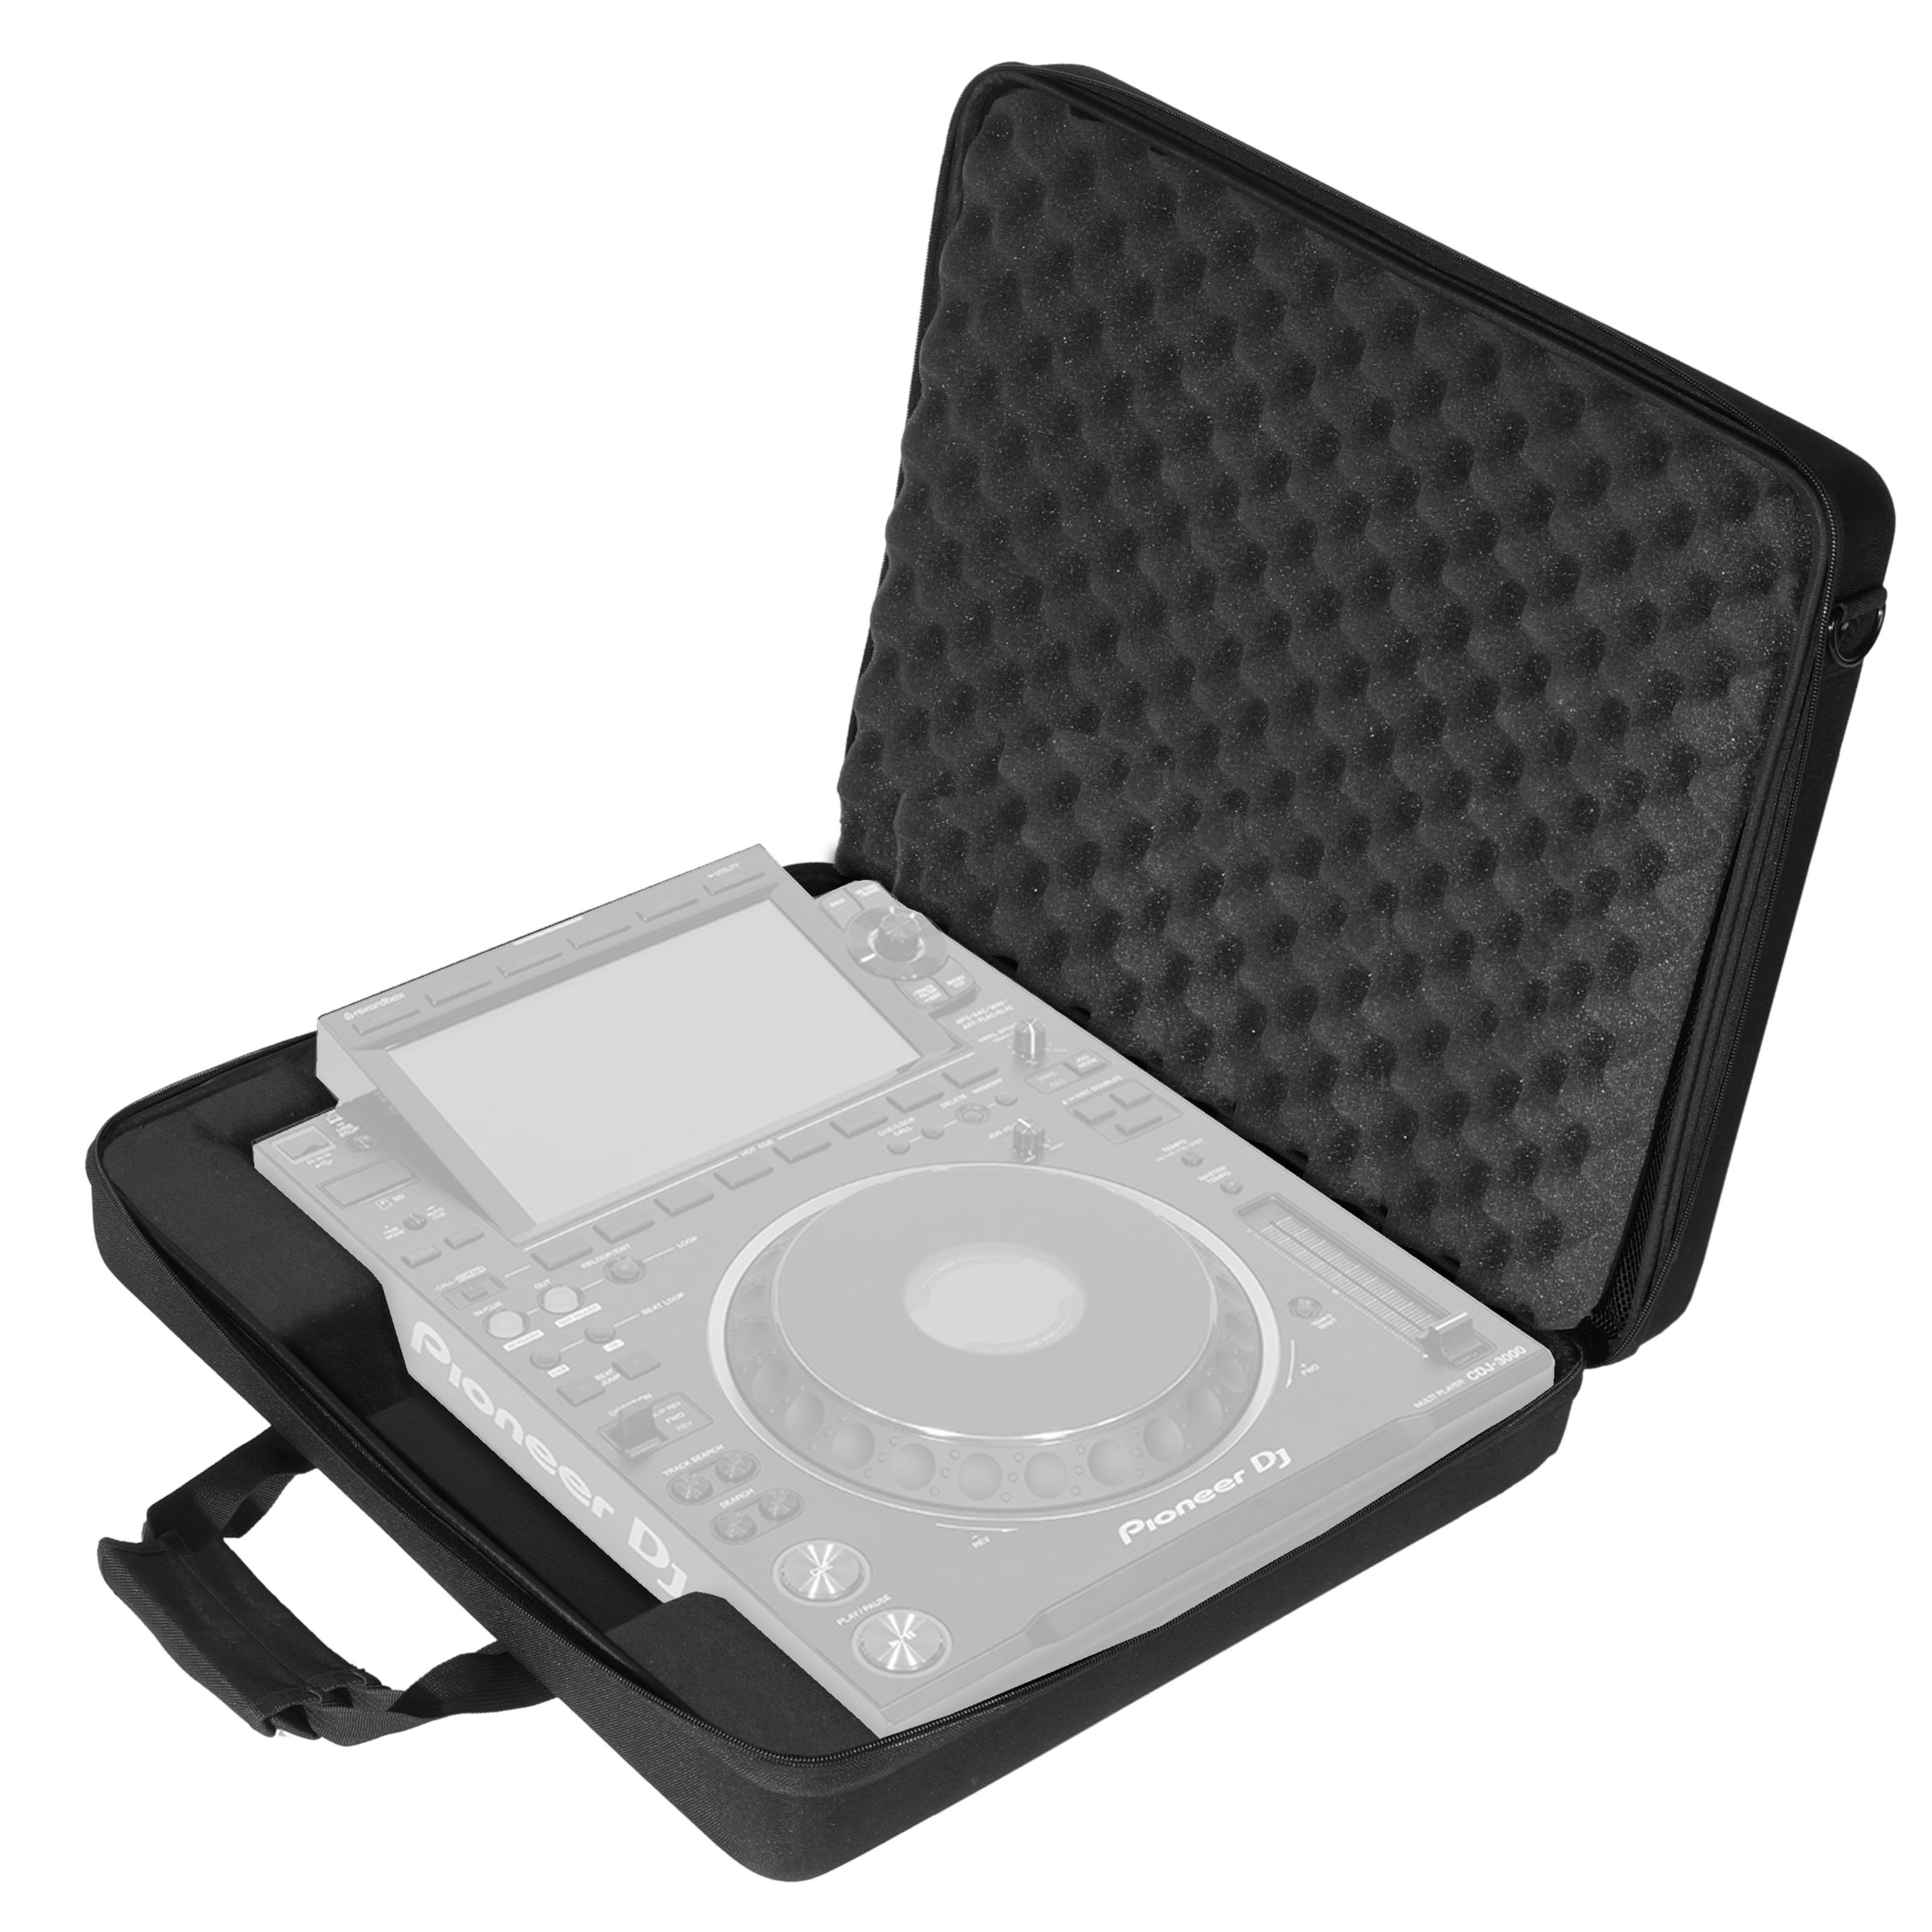 UDG DVD-Hülle, Creator Pioneer CDJ-3000 Hardcase Black (U8489BL) - CD Player Case